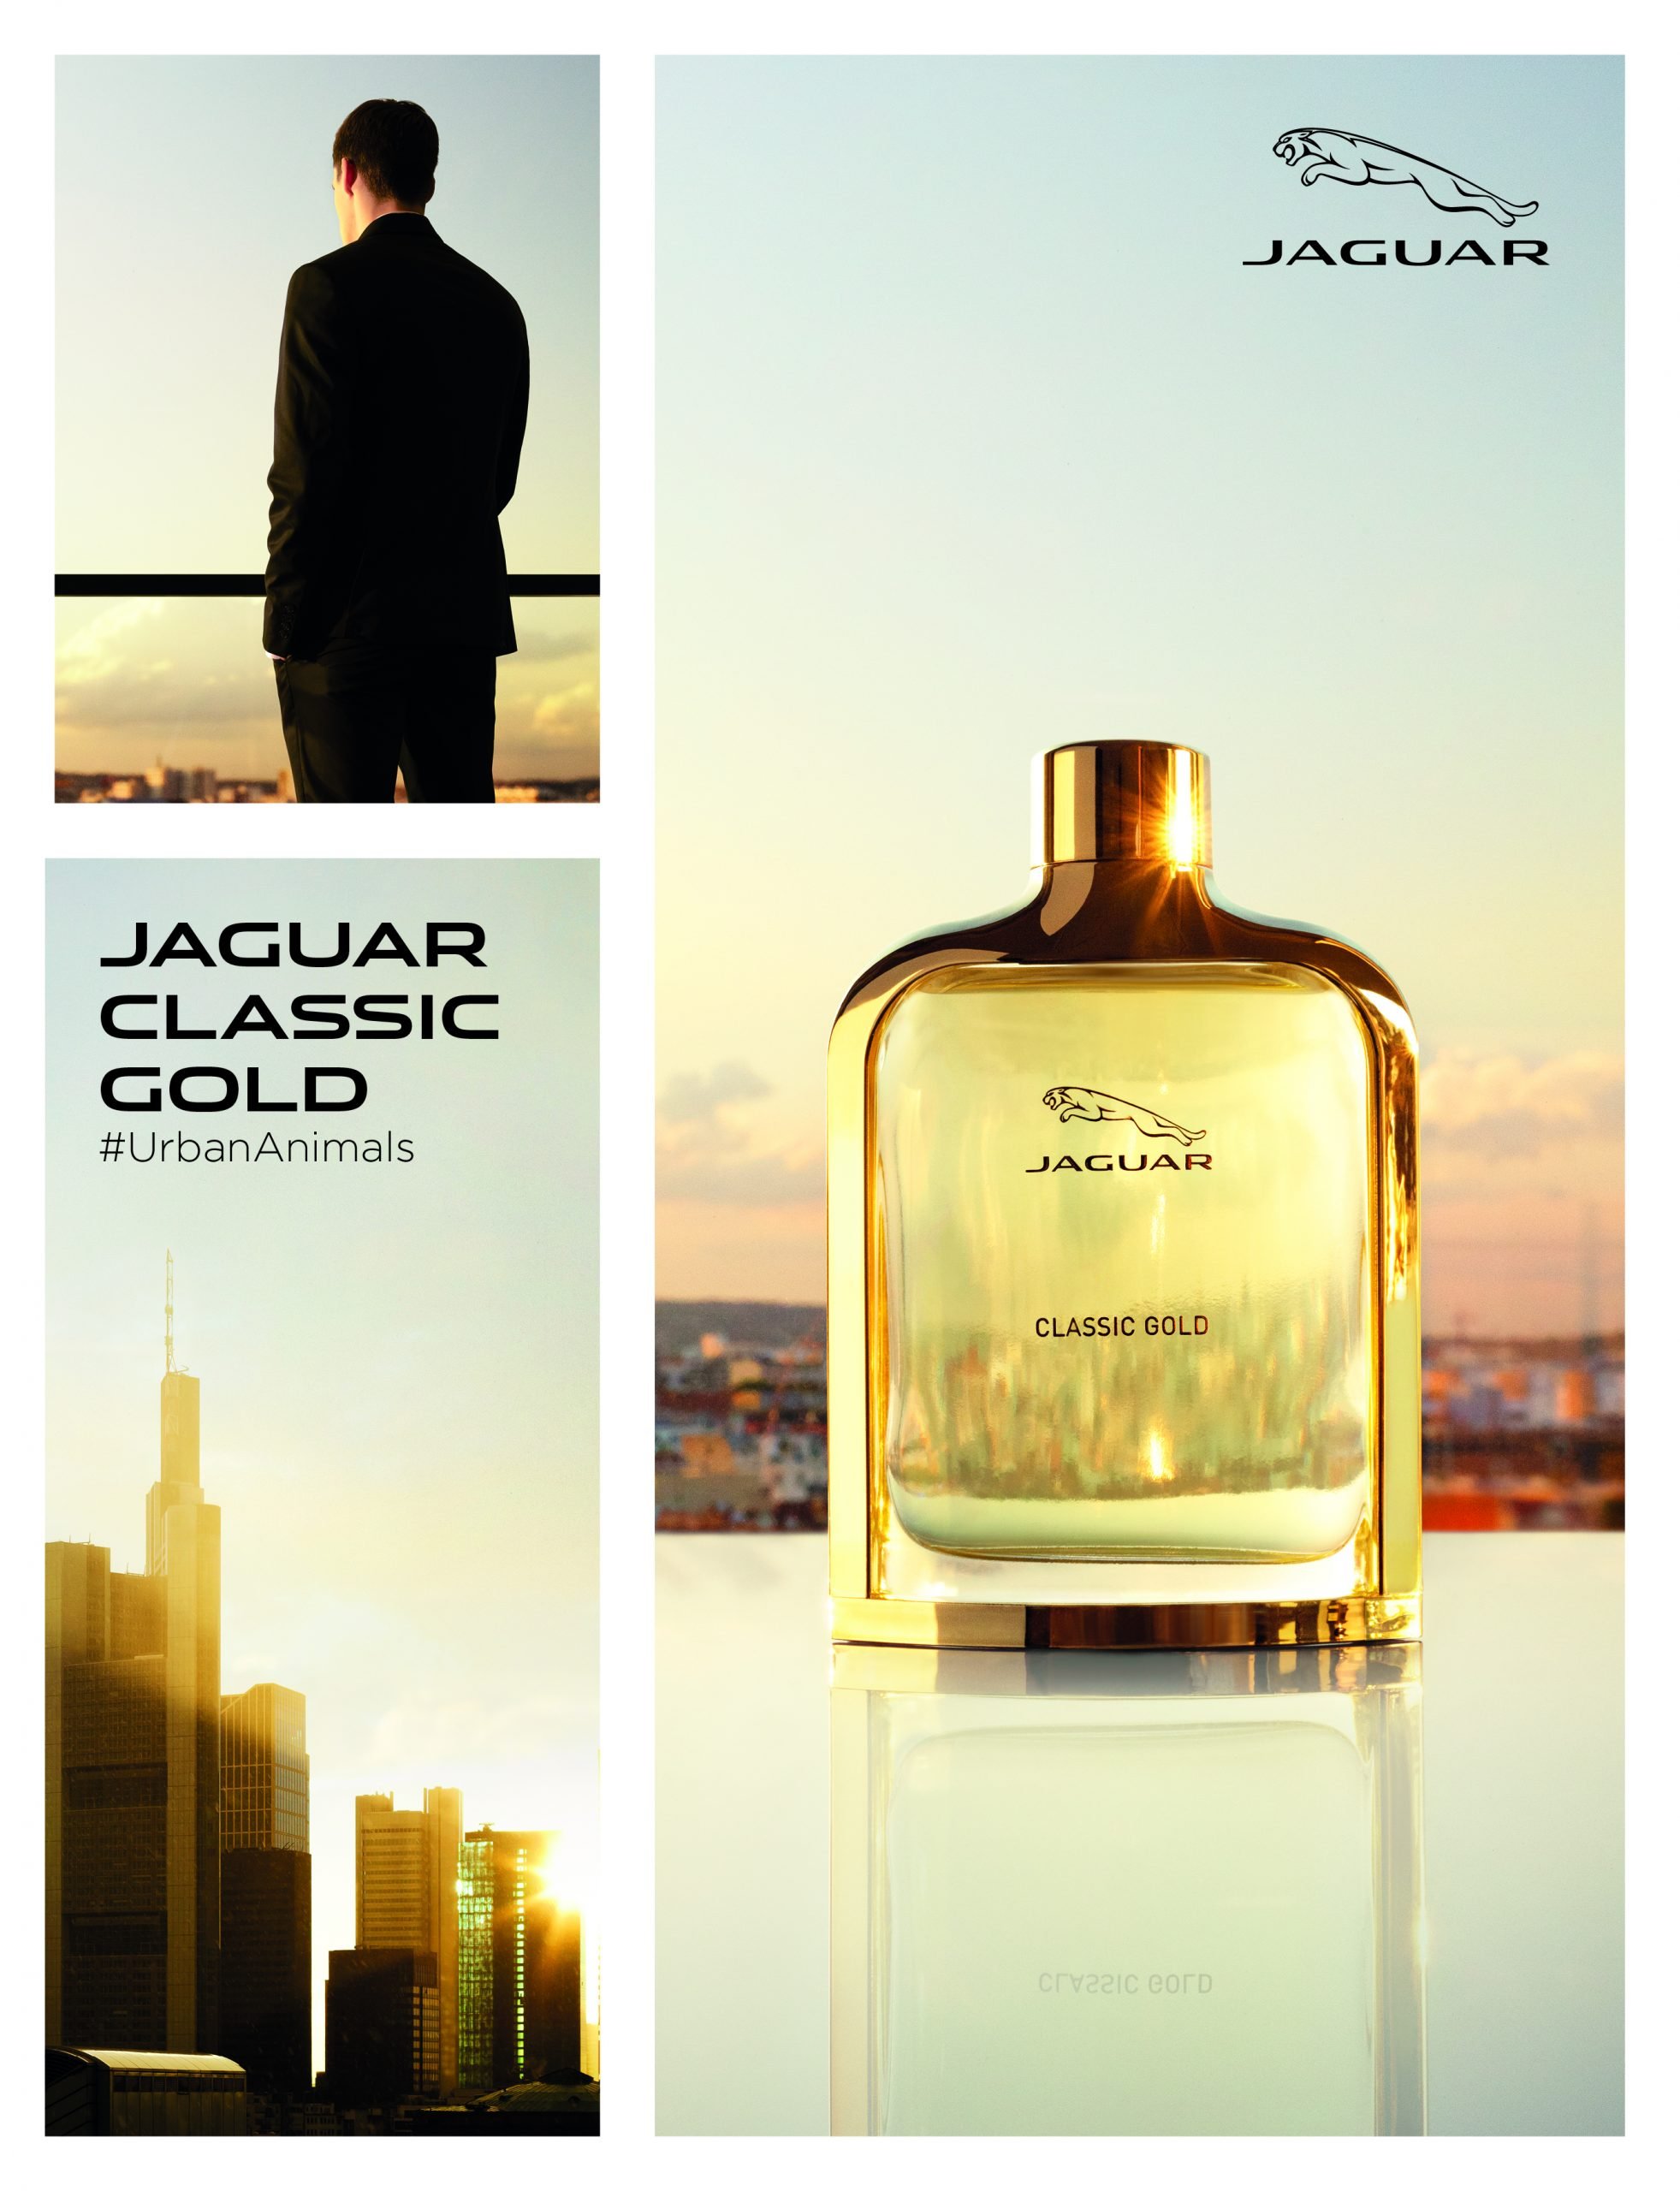 Jaguar Classic Gold For Men